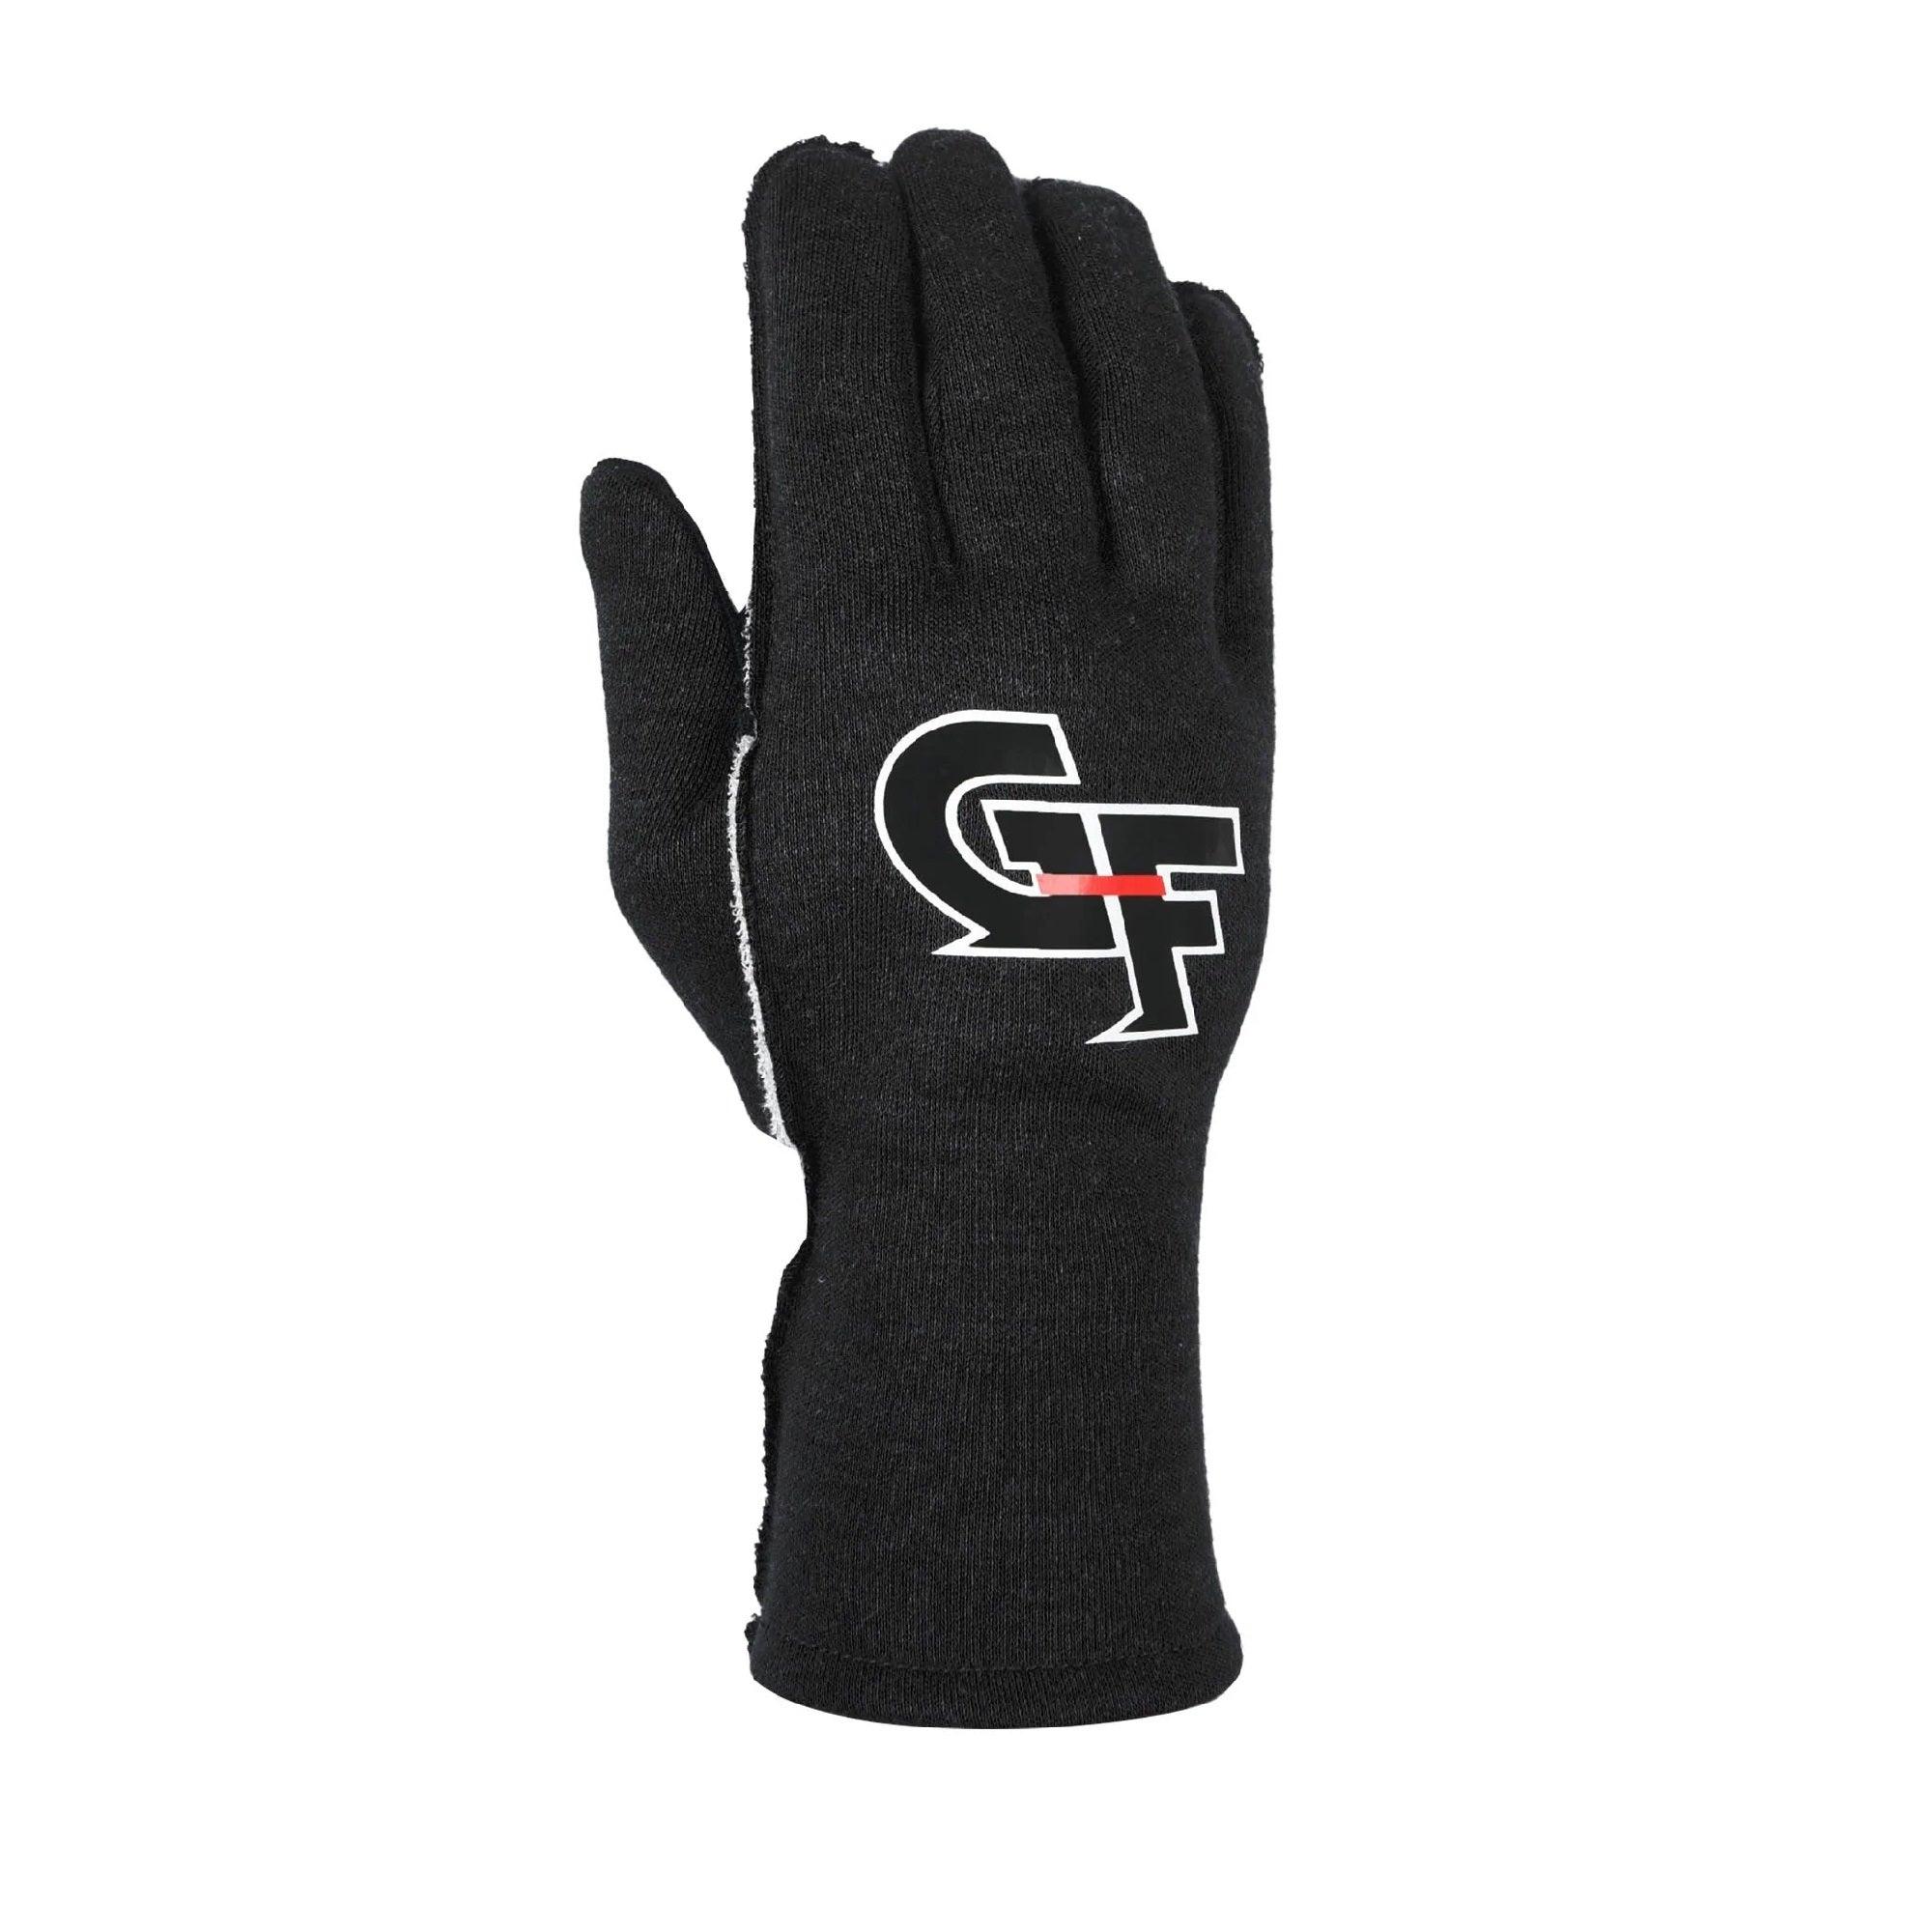 Gloves G-Limit Large Black - Burlile Performance Products